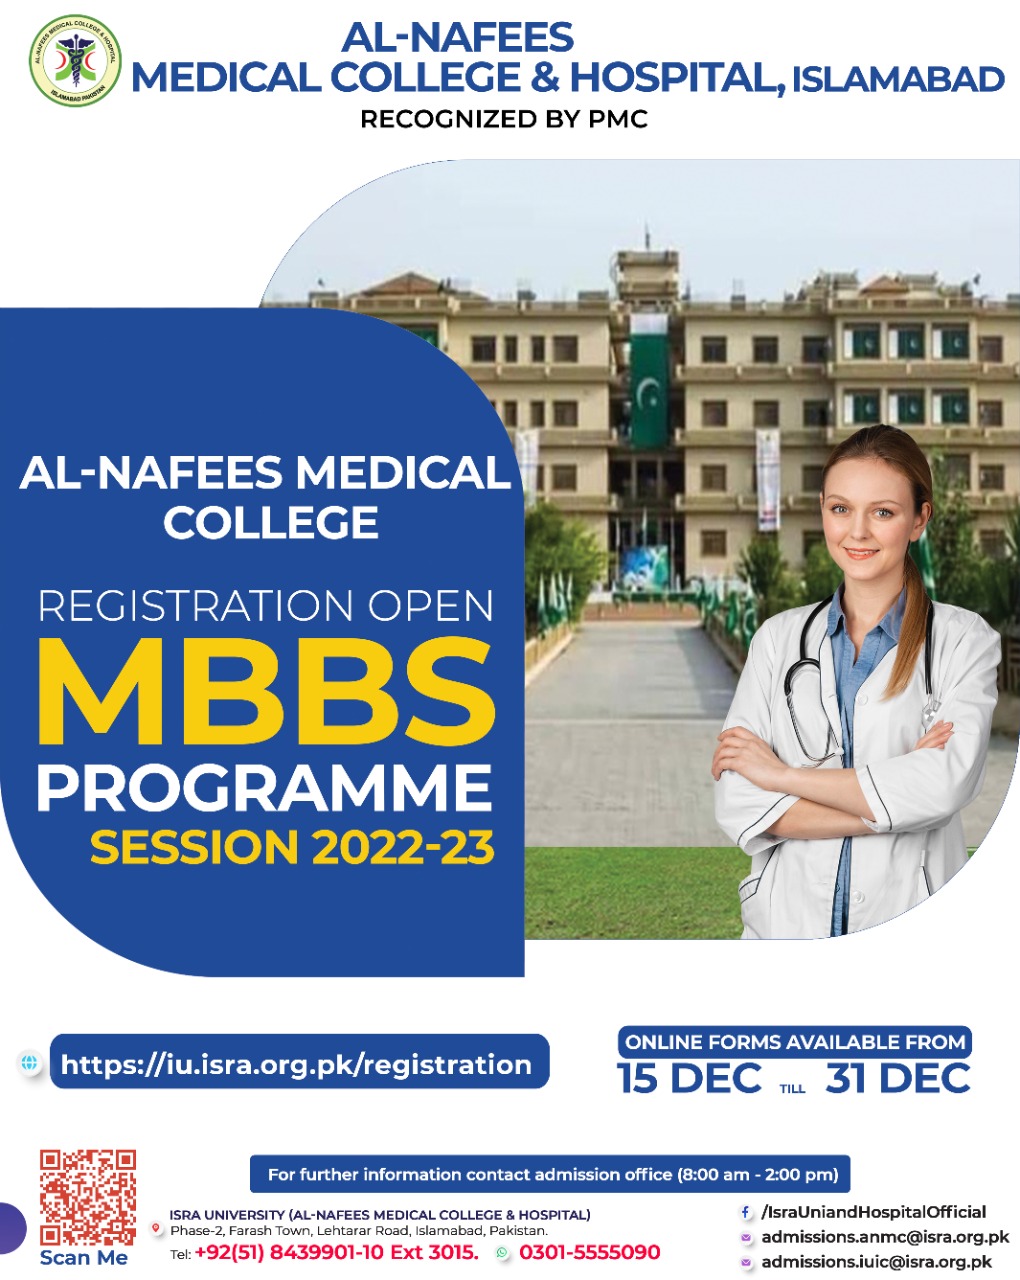 Registration for MBBS programme for Session 2022-23 at Al-Nafees Medical College & Hospital, Islamabad